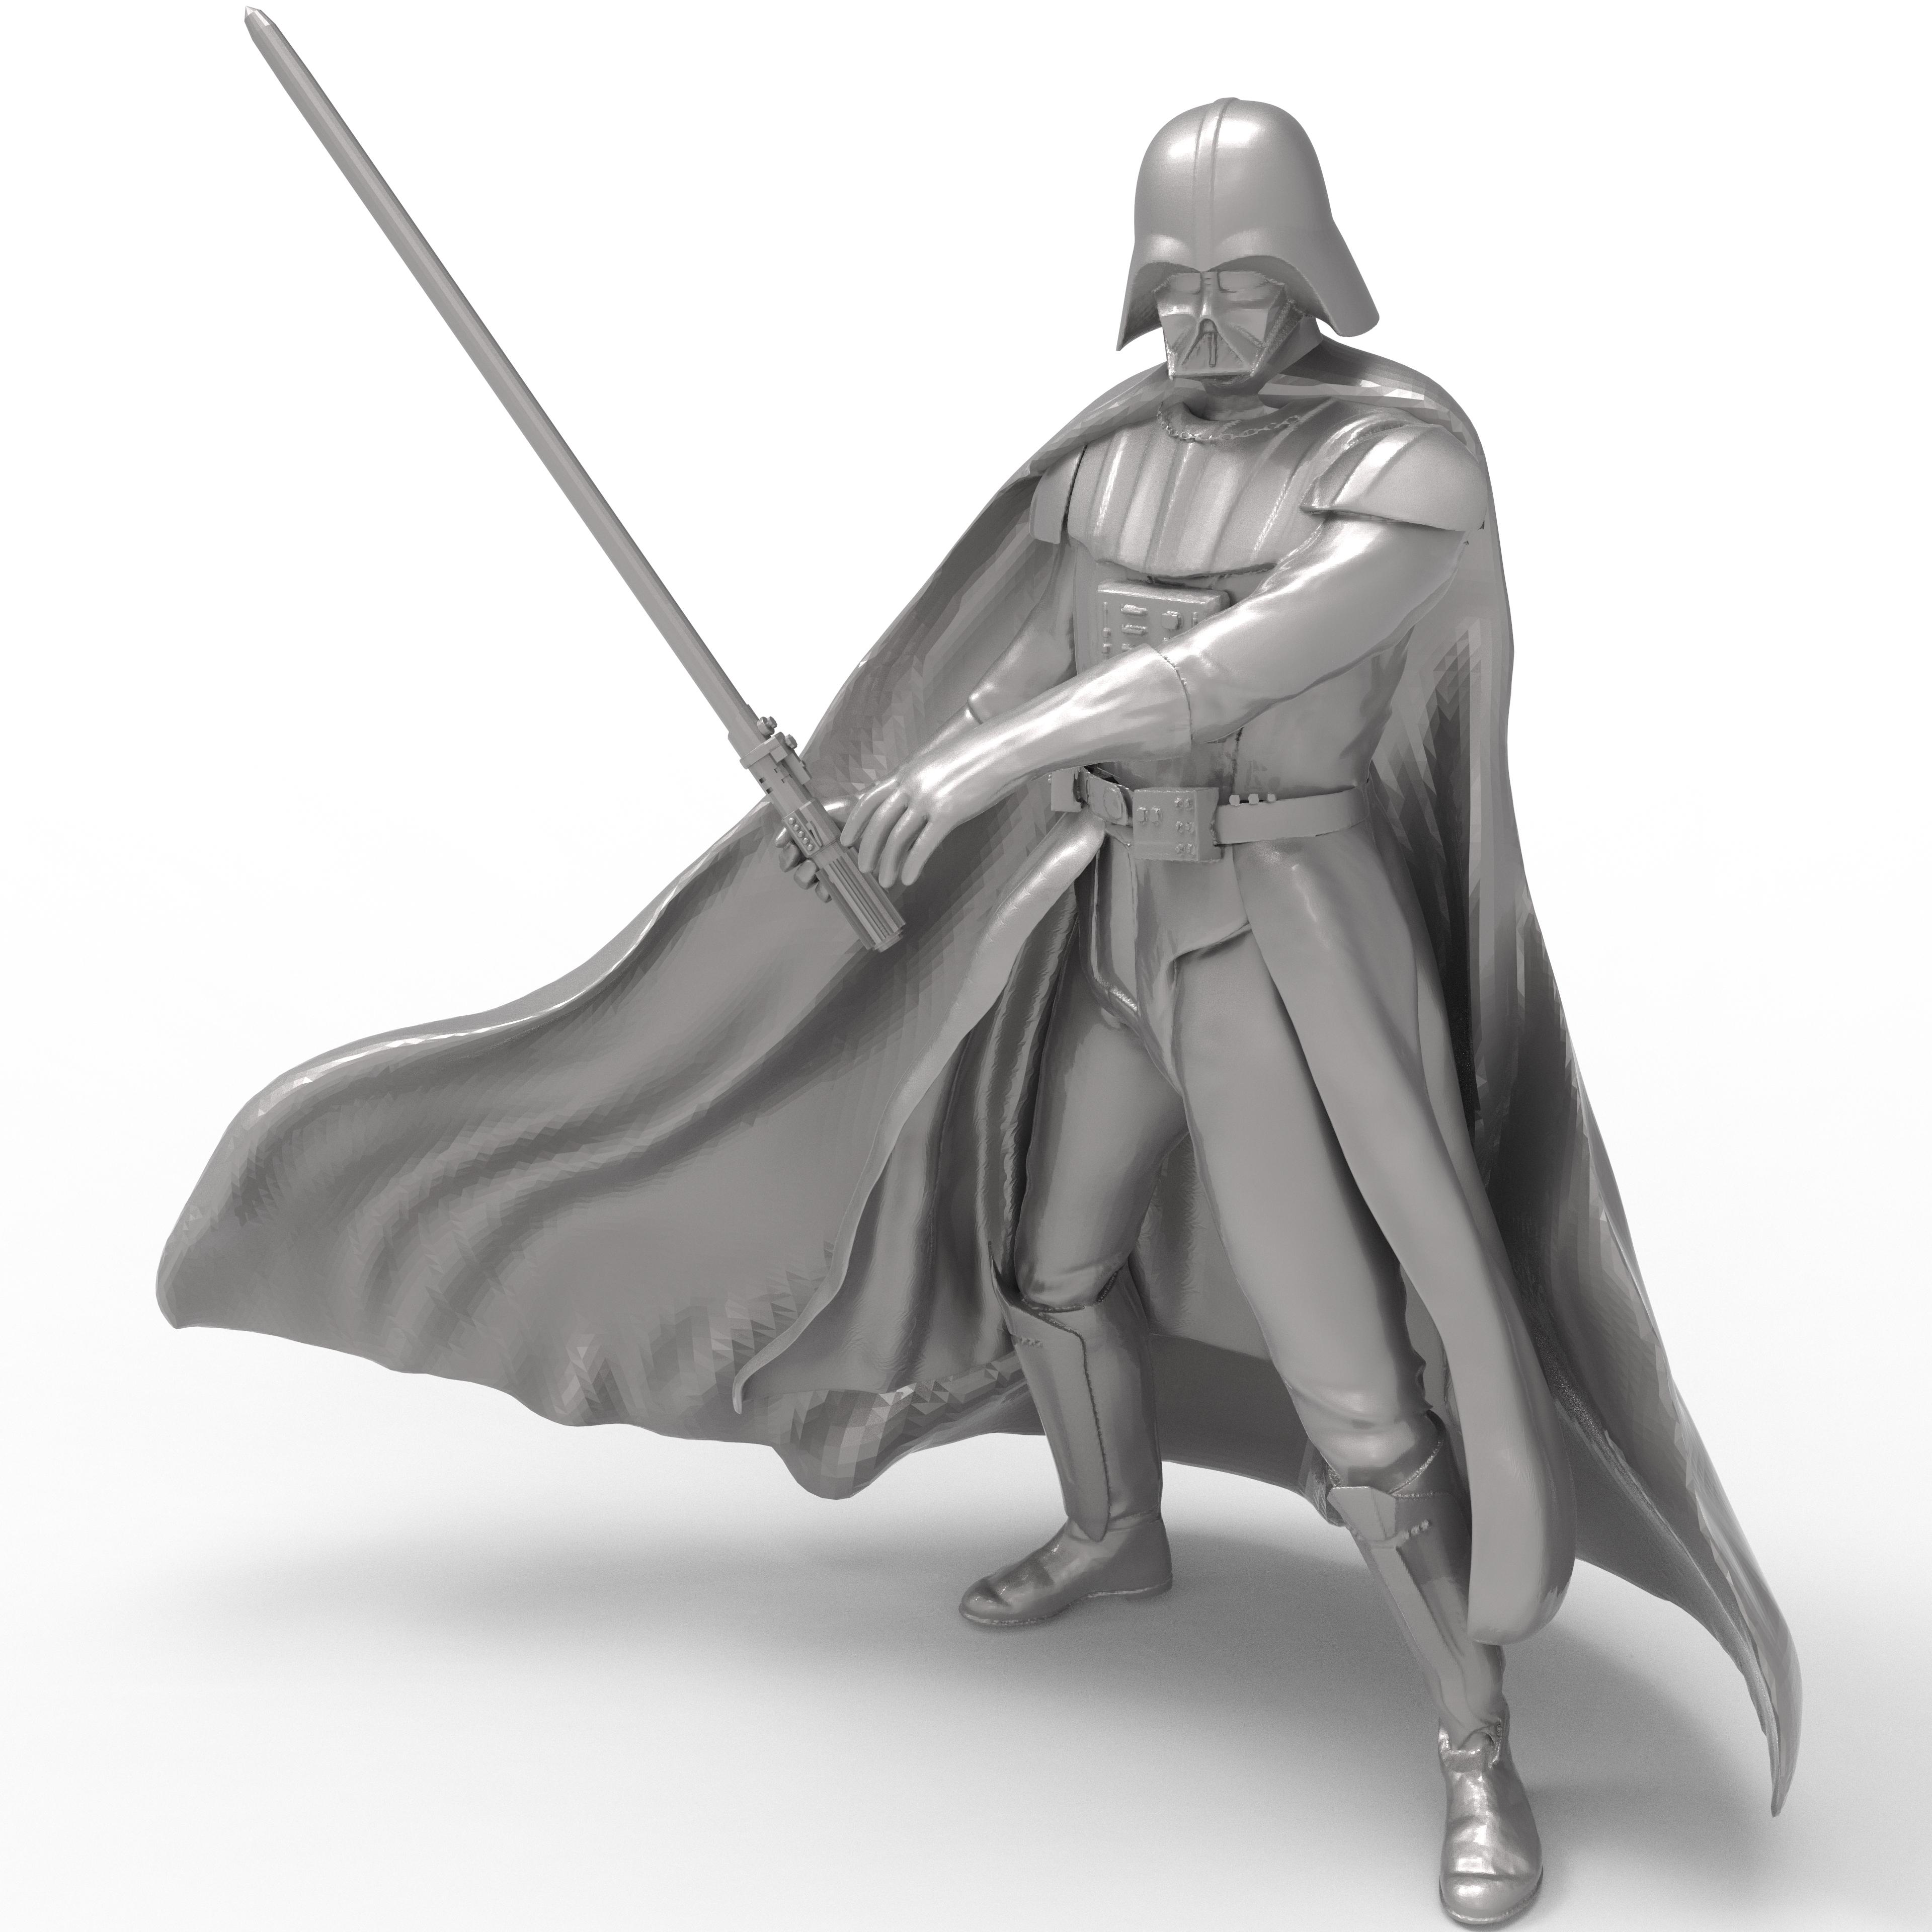 Darth Vader with lightsaber - #Starwars Darth vader - 3d model